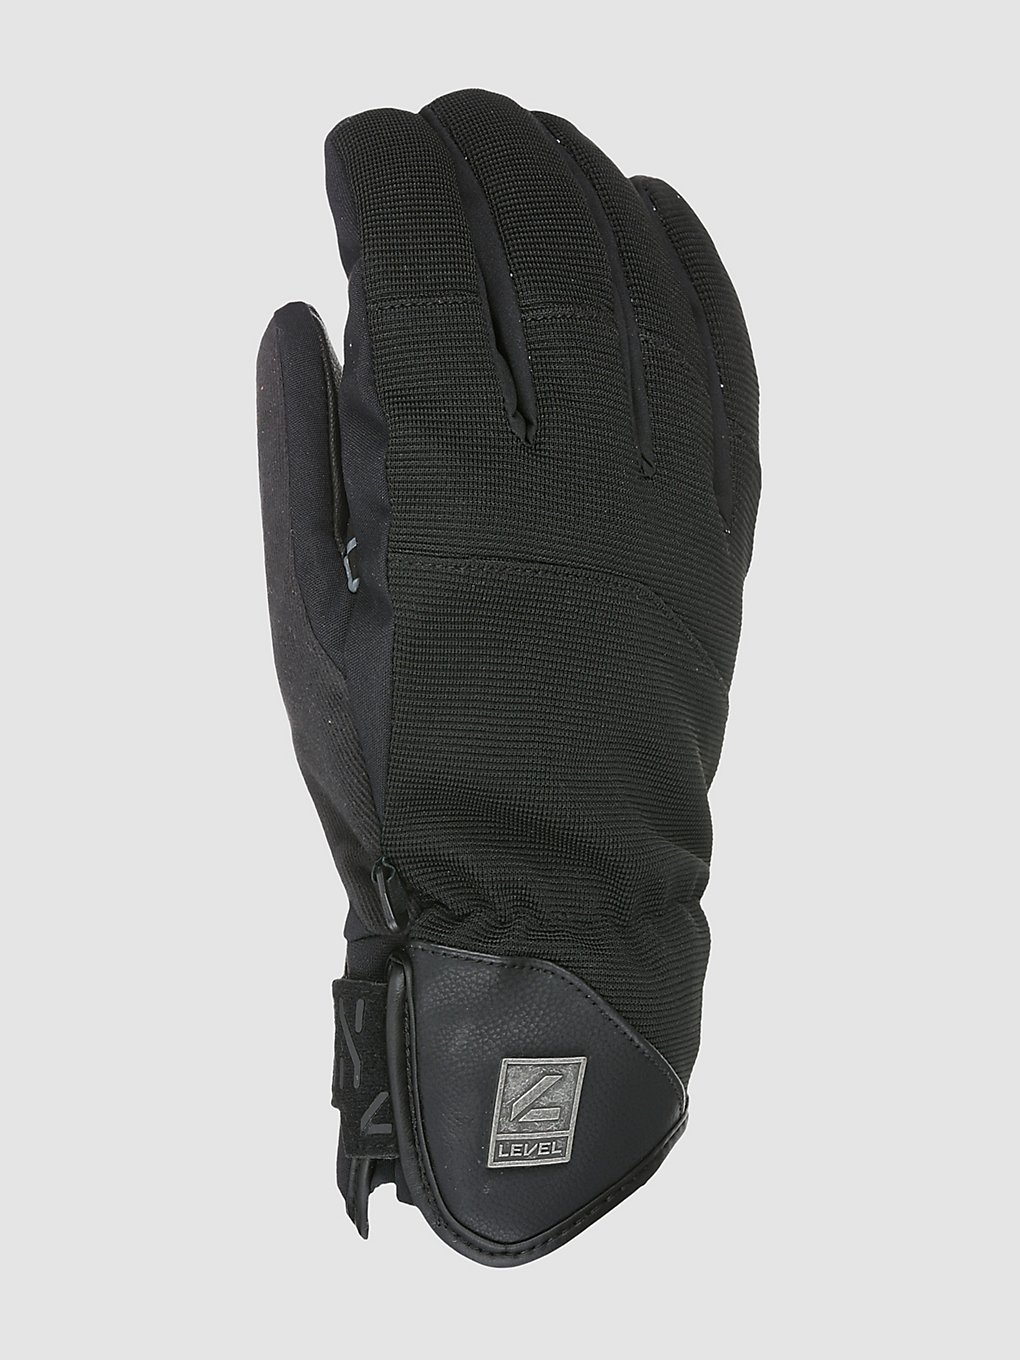 Level Suburban Handschuhe black1 kaufen